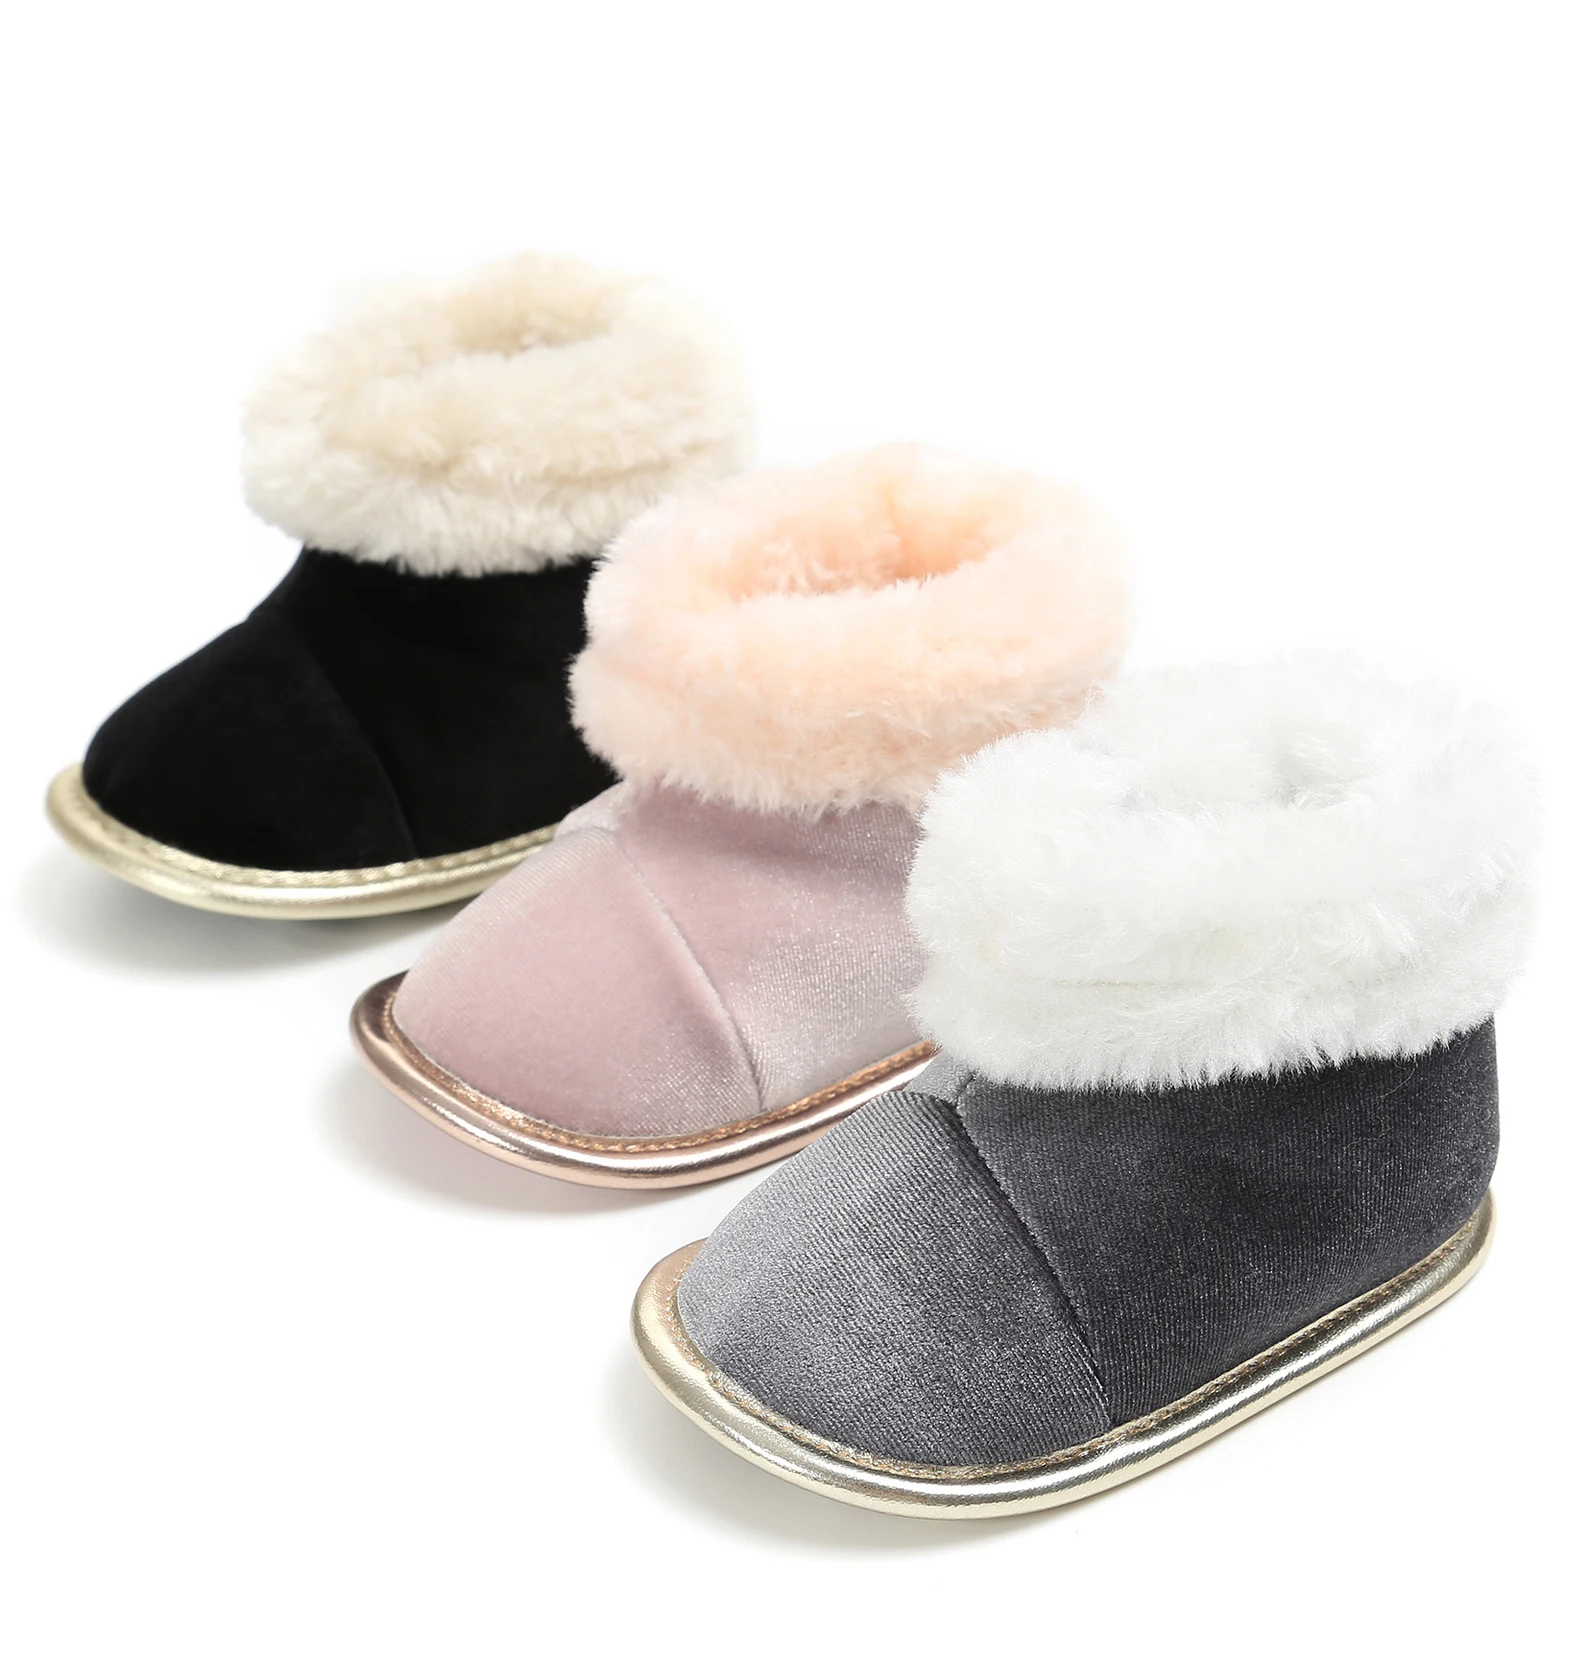 
Wholesale fashion winter Flannel upper Fur lining outdoor warm prewalker infant girl baby boots 